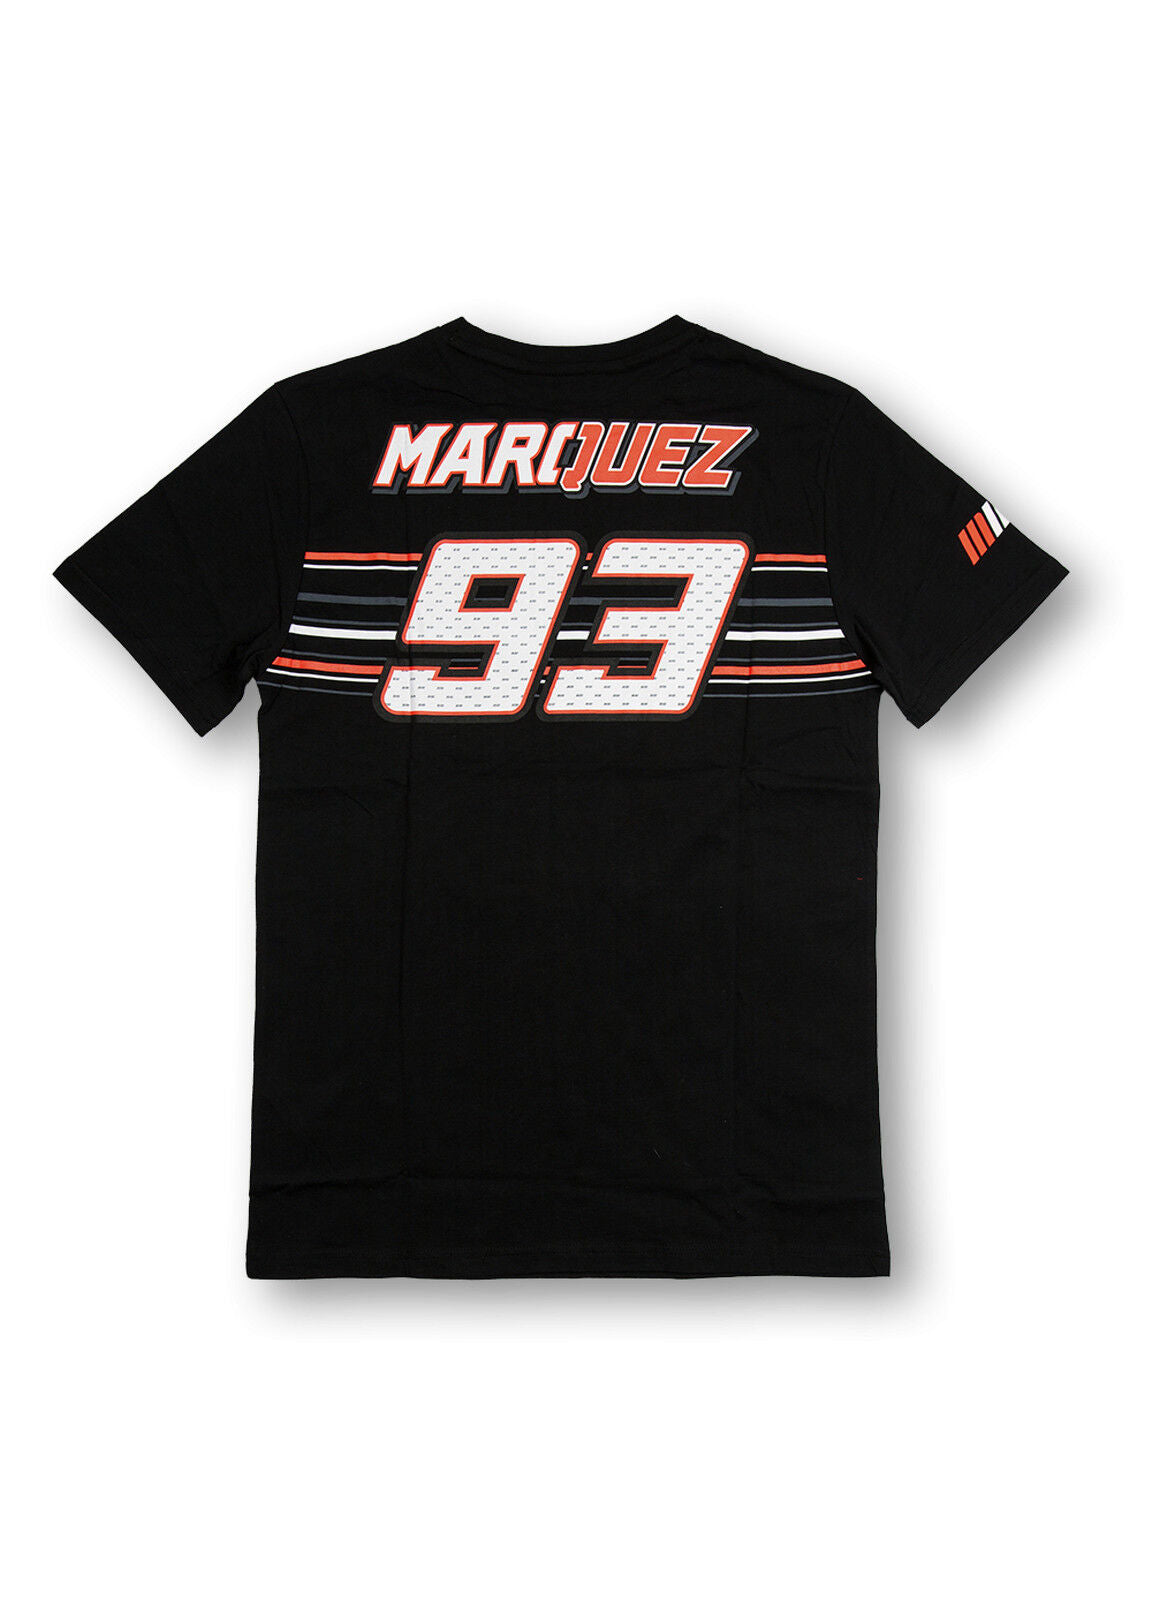 New Official Marc Marquez 93 Stripes T-Shirt - Mmmts 156504